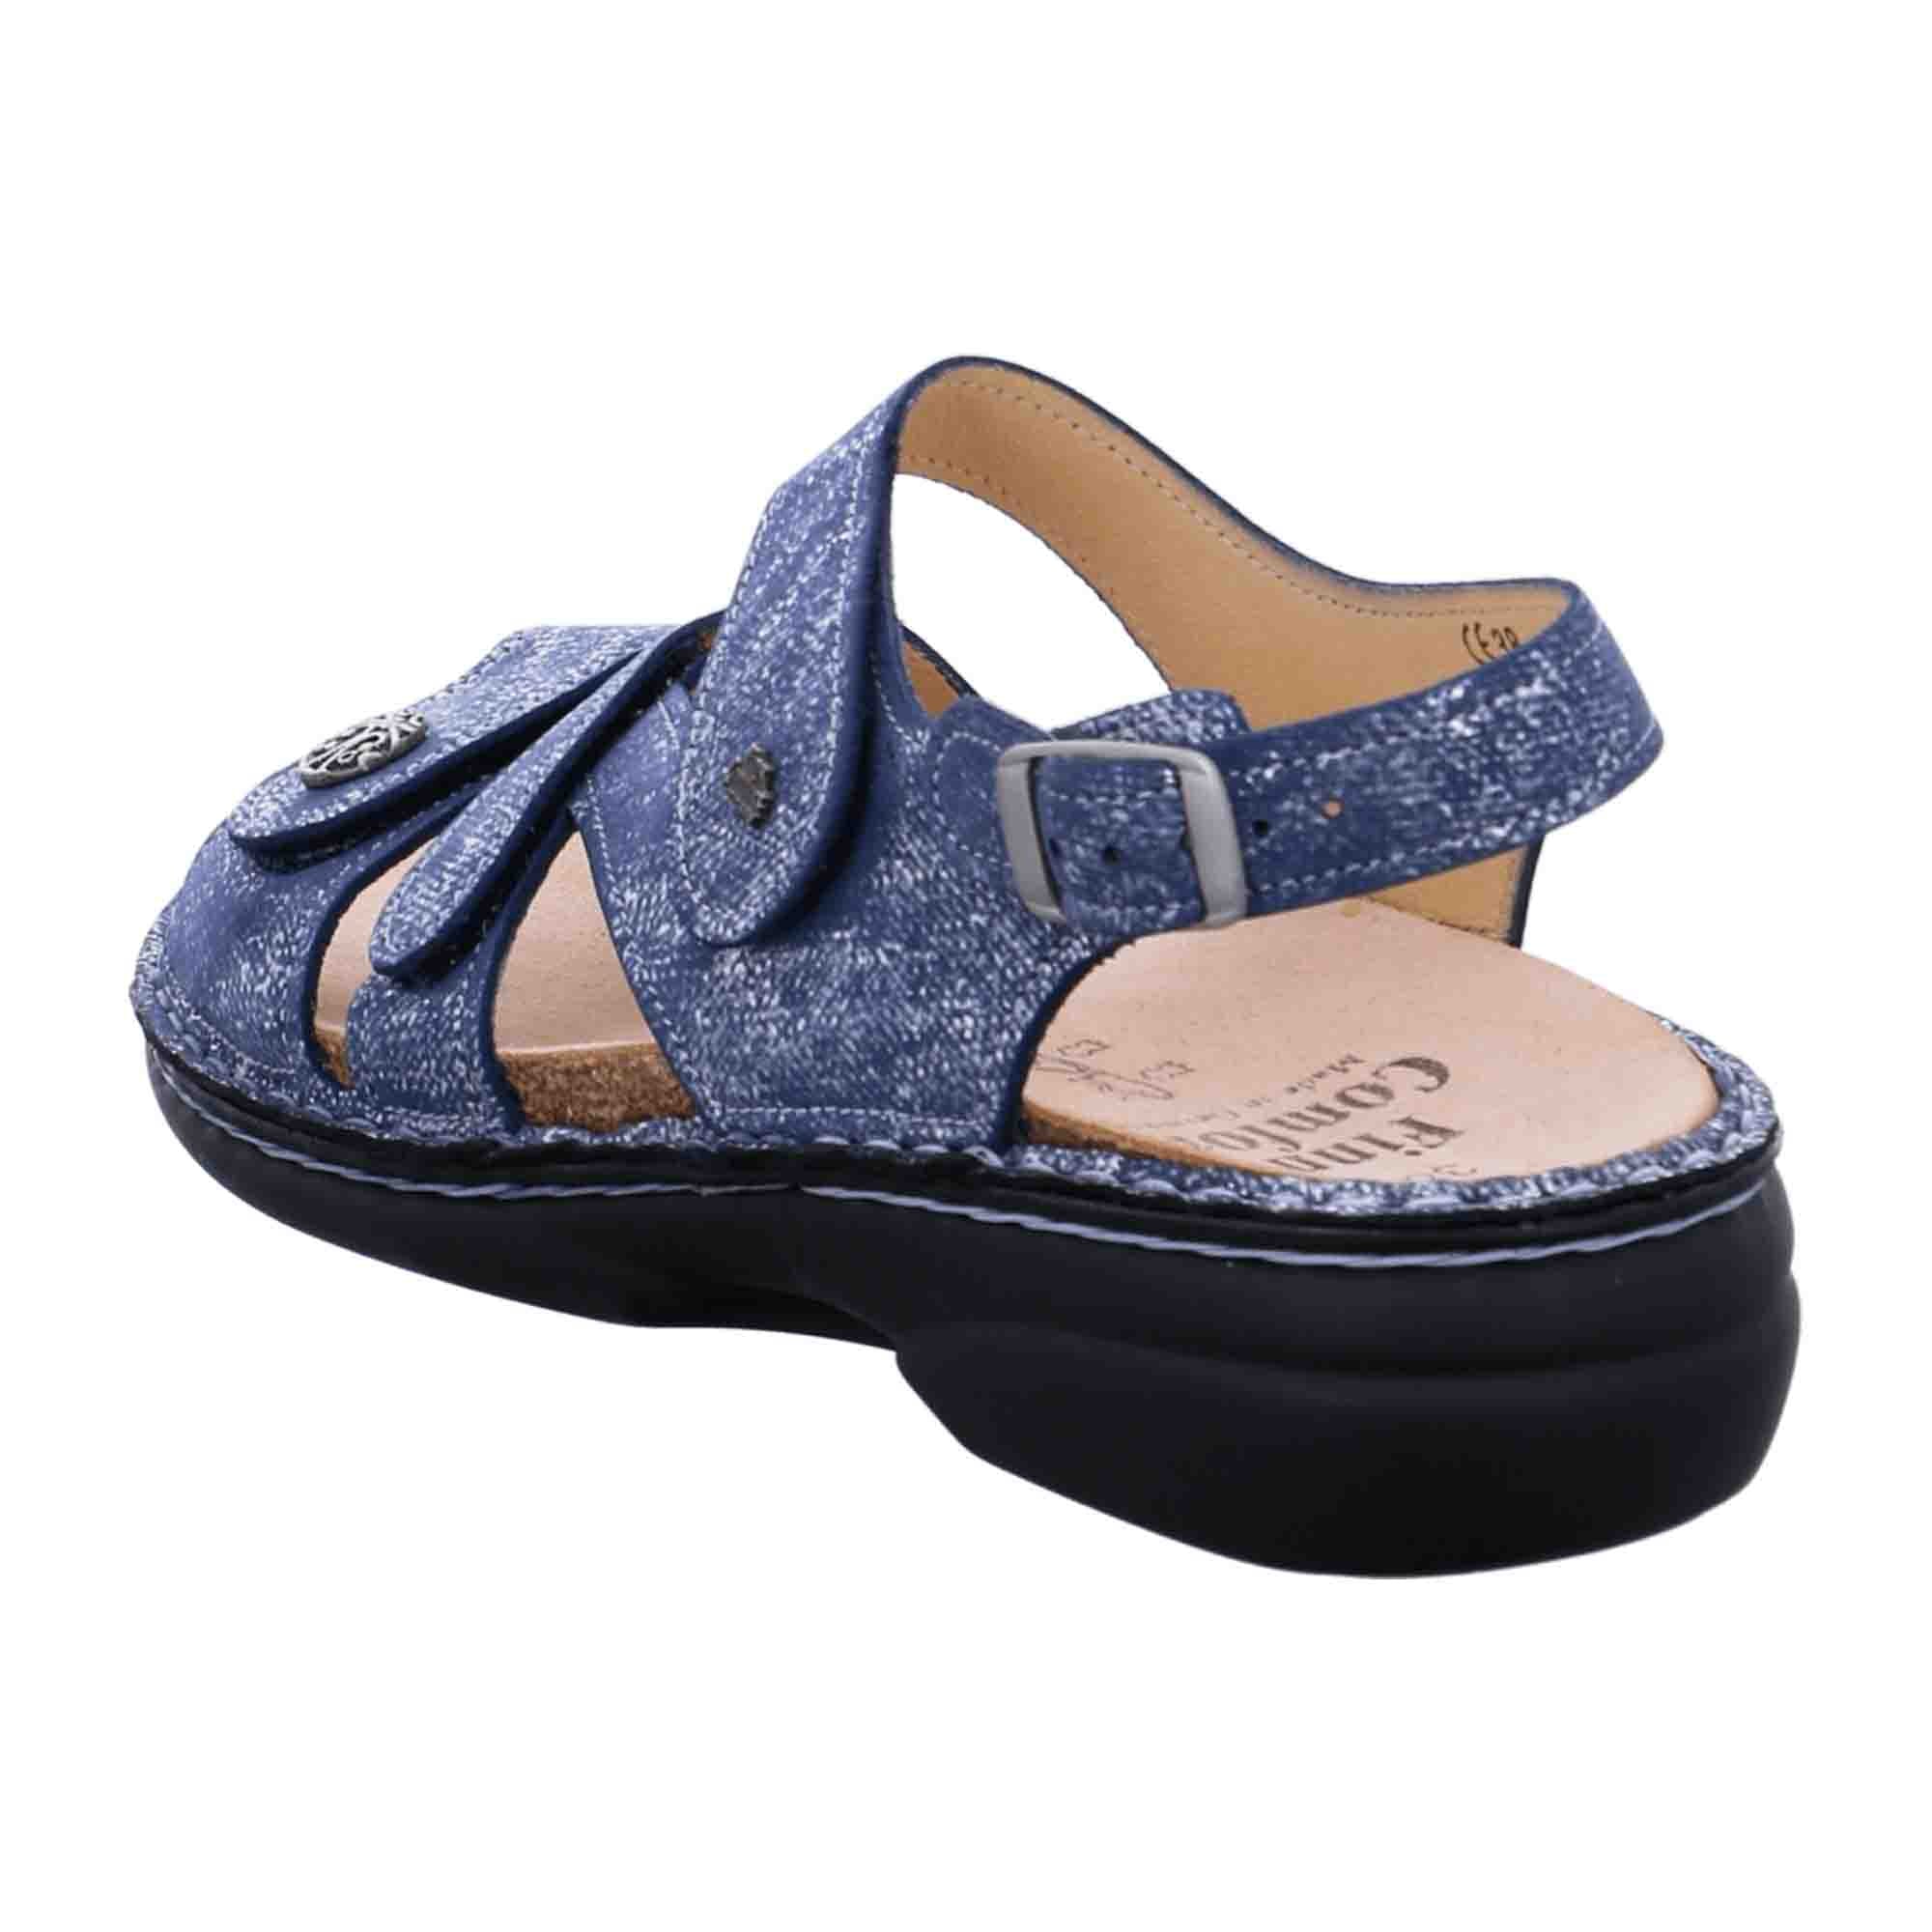 Finn Comfort Gomera Women's Sandals - Stylish & Comfortable Blue Leather